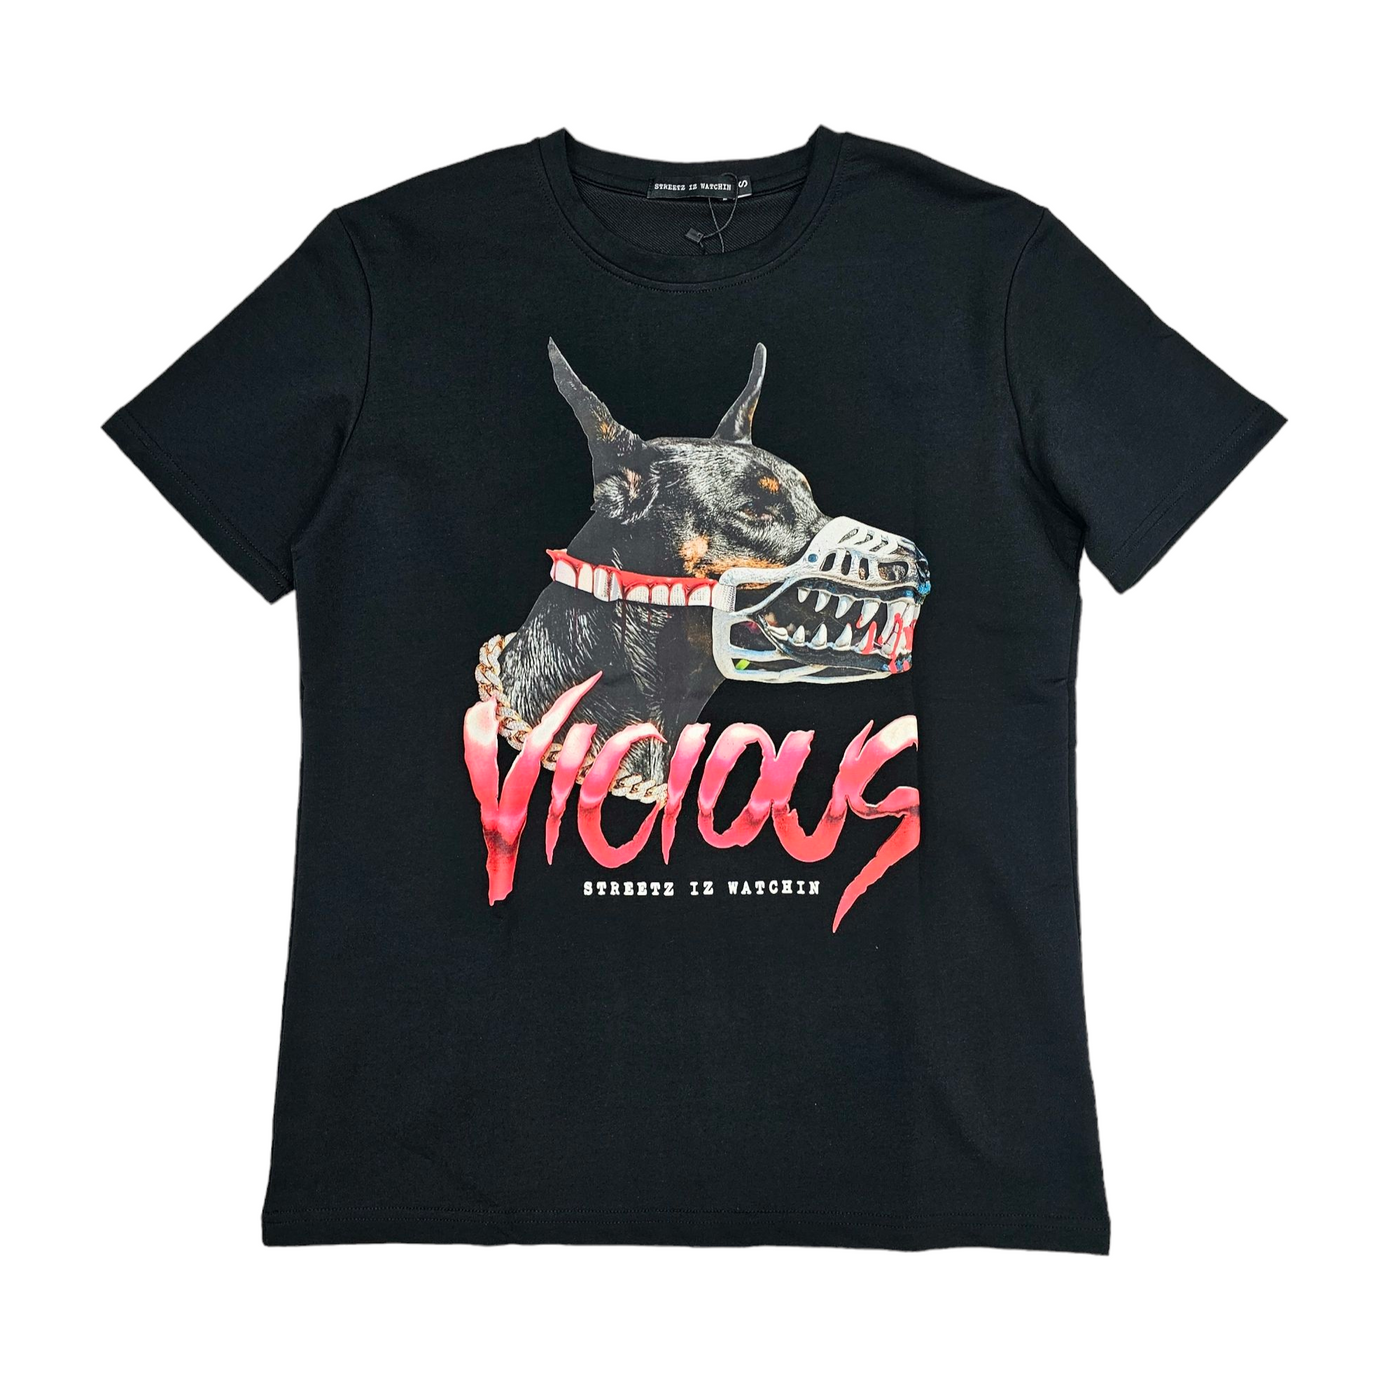 SIW Vicious T-Shirt